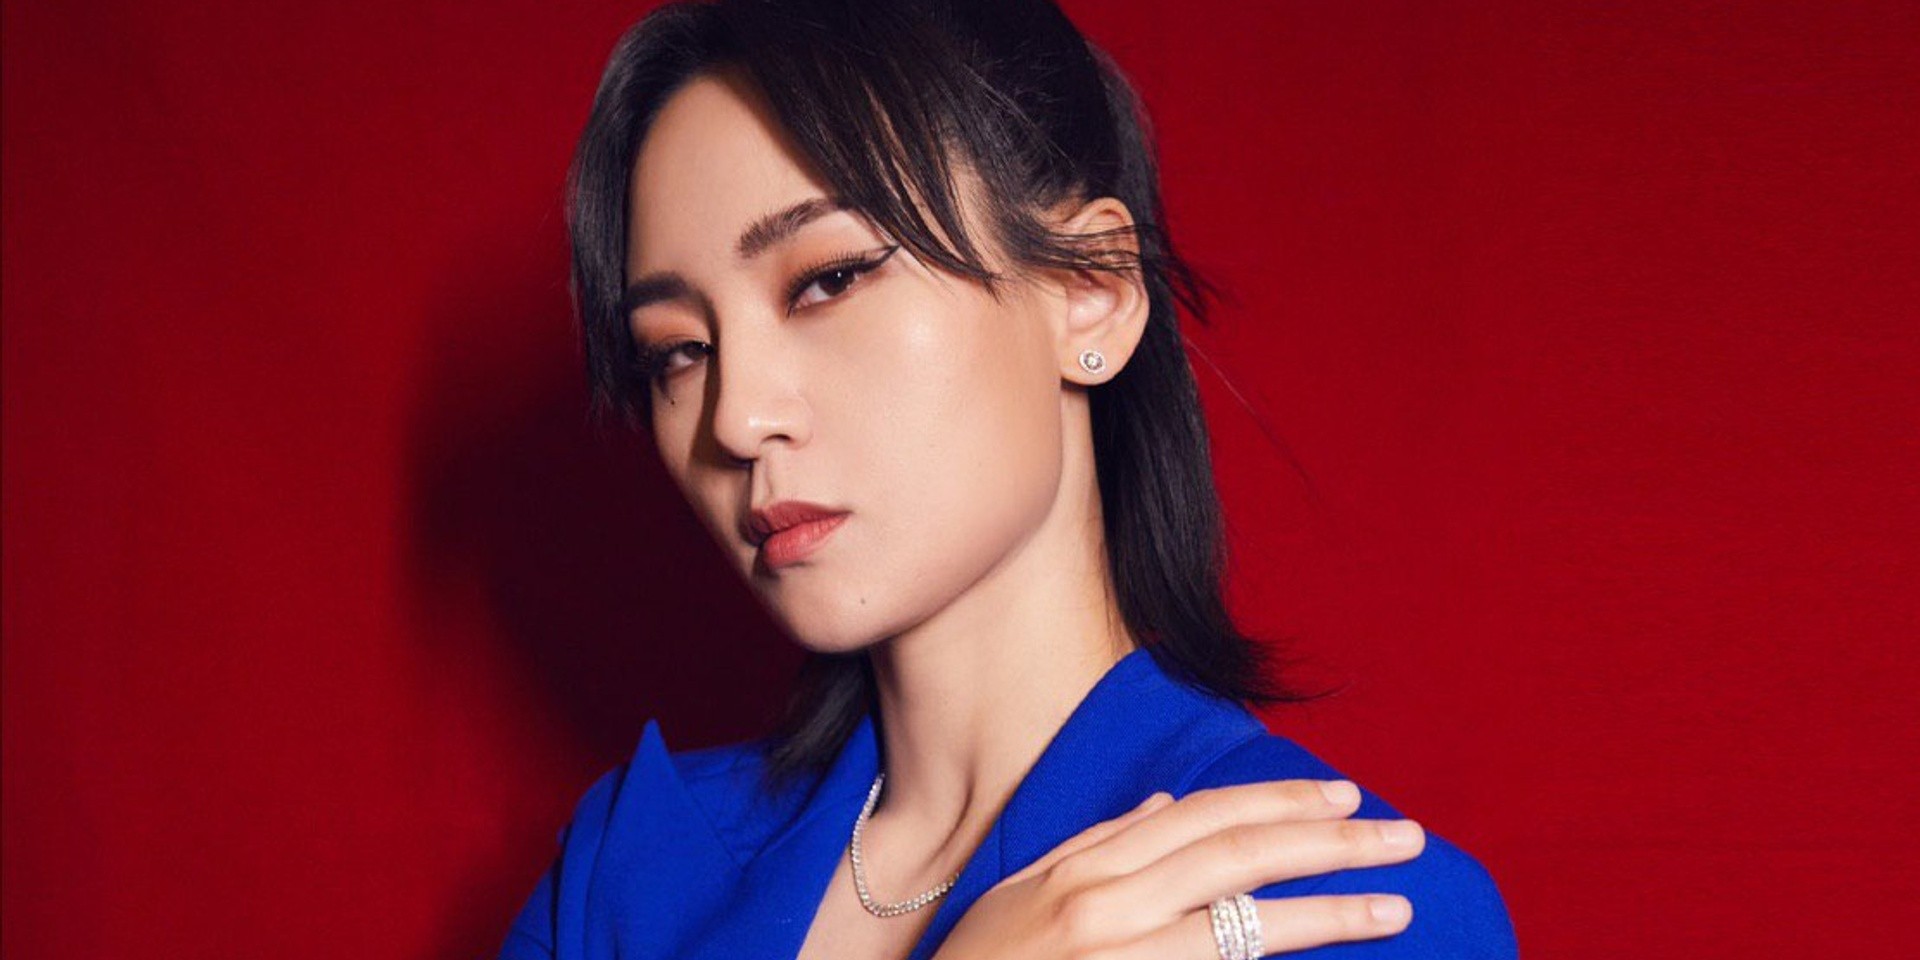 Mandopop artist Bibi Zhou releases new album, Slime 